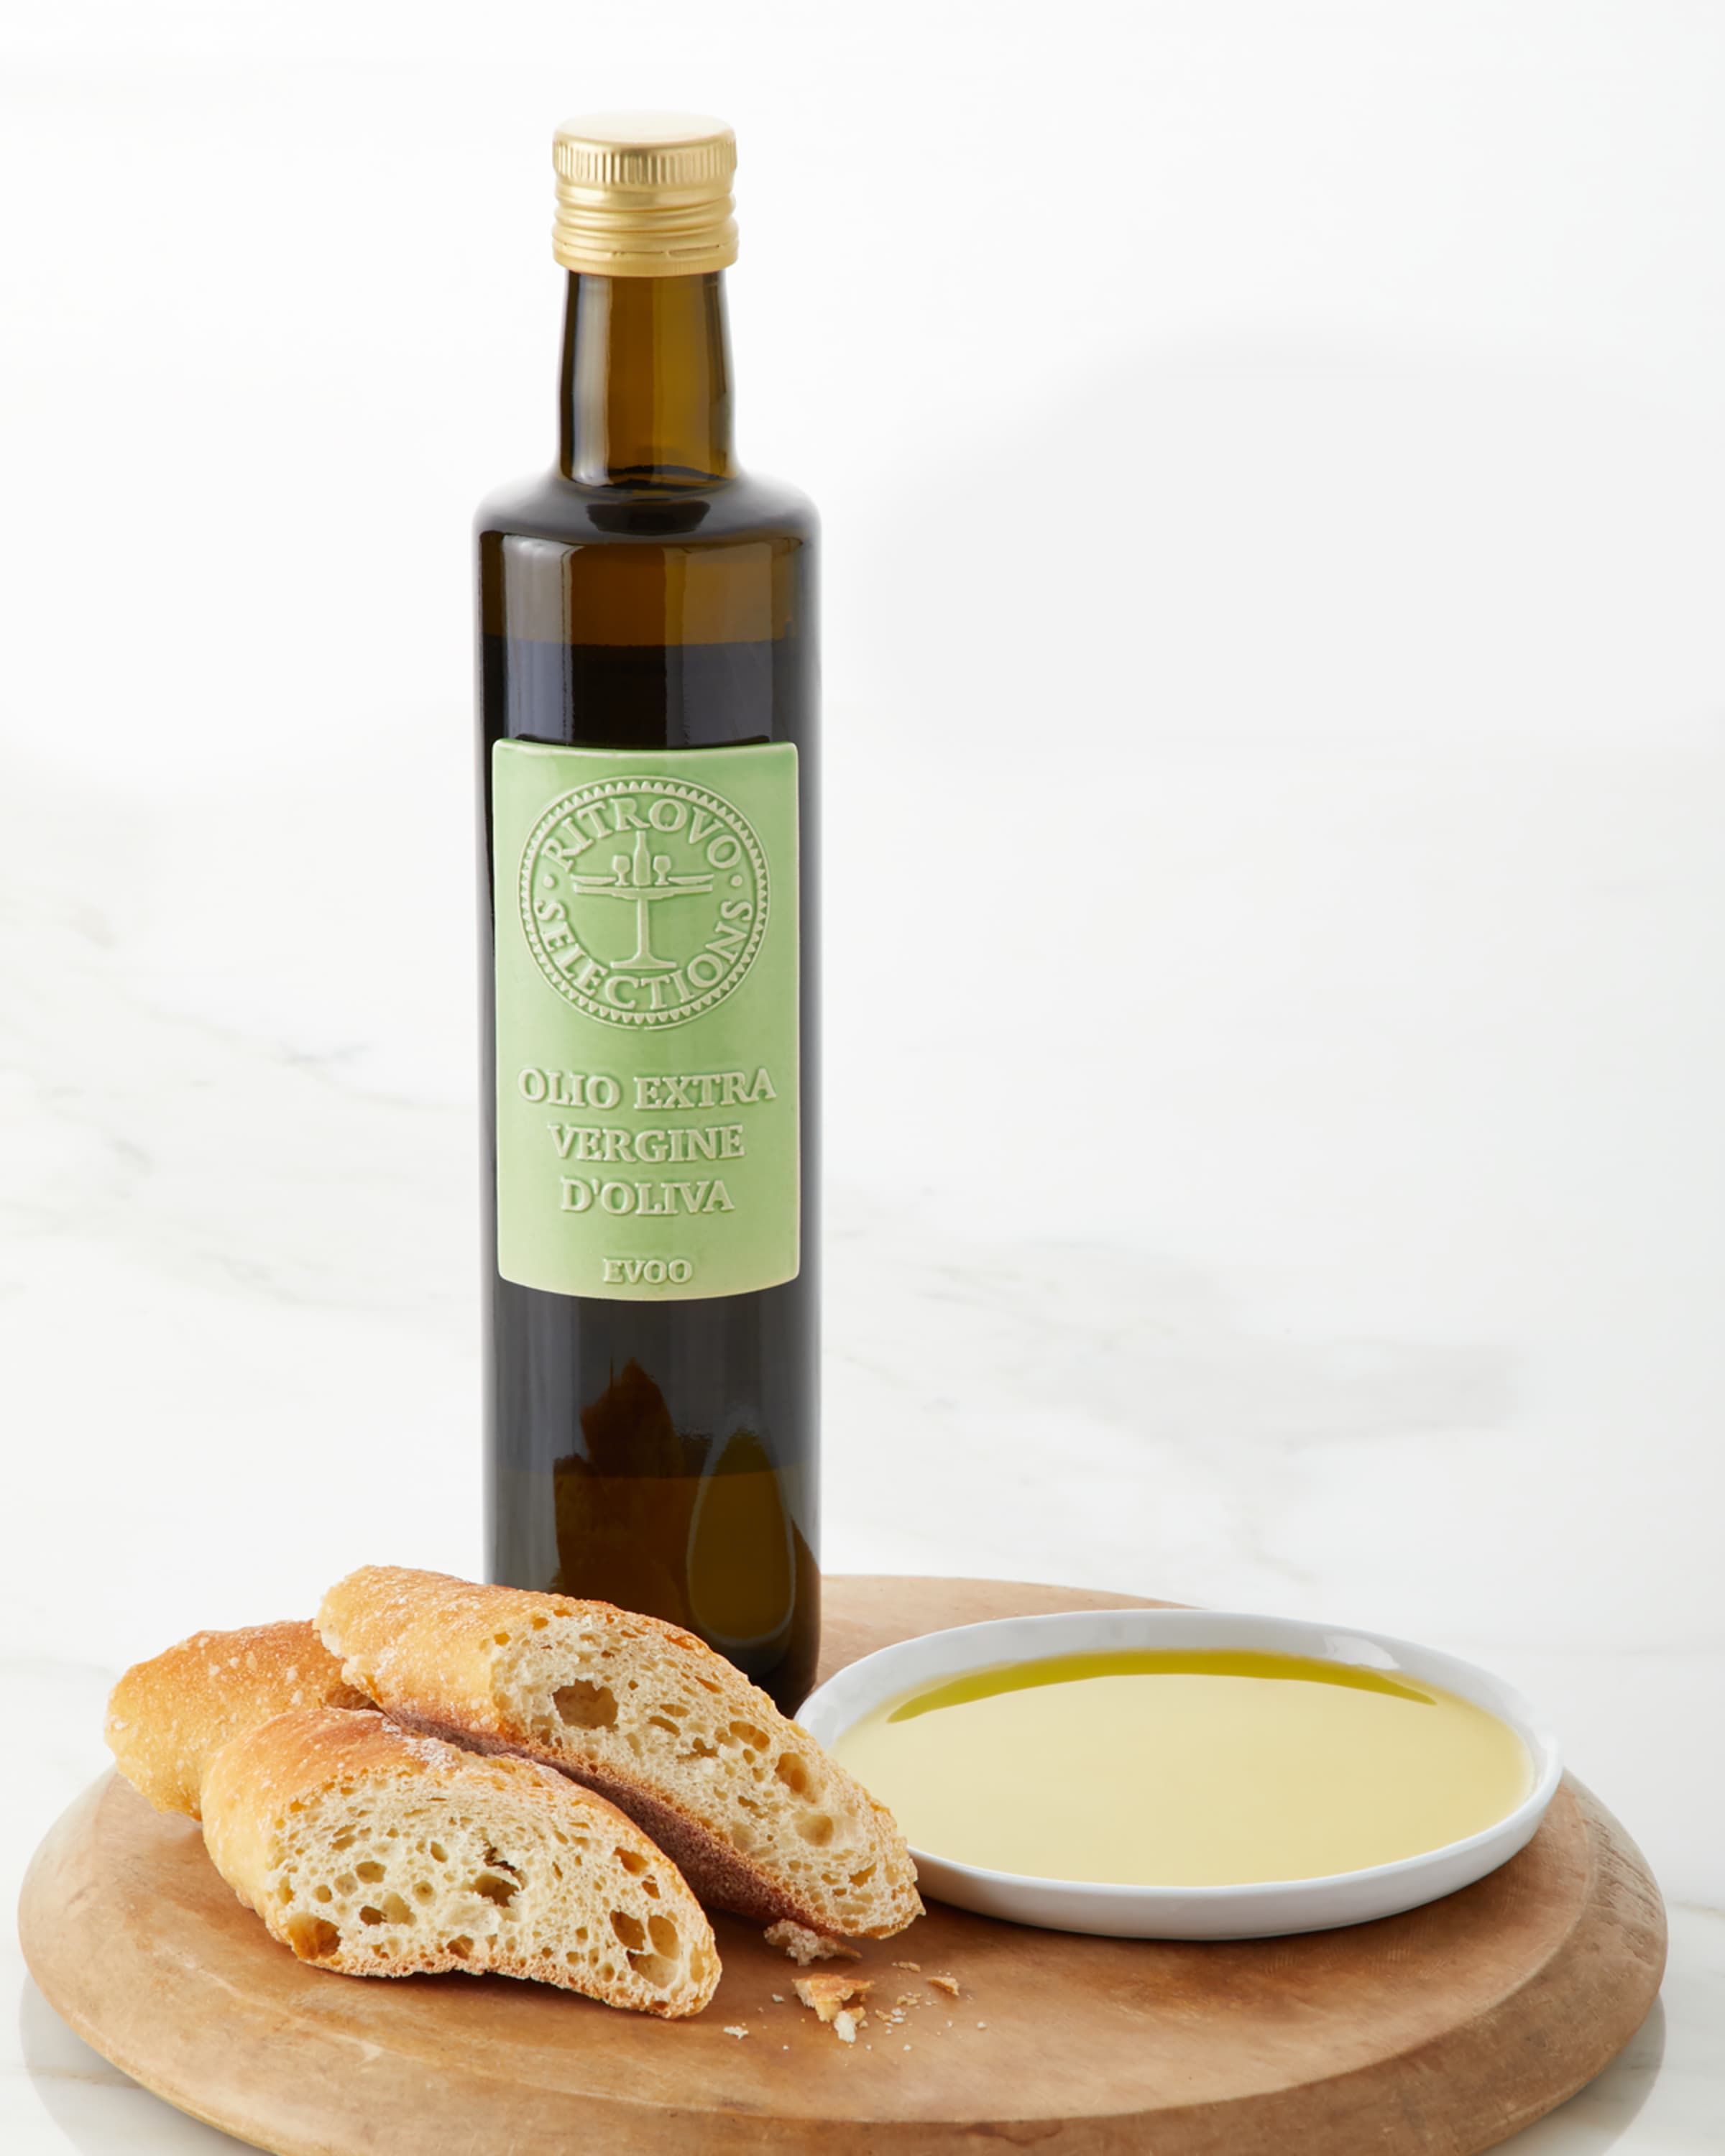 Ritrovo Italian Regional Foods Le Ferre Mild Extra Virgin Olive Oil Bottle with Decorative Ceramic Tile